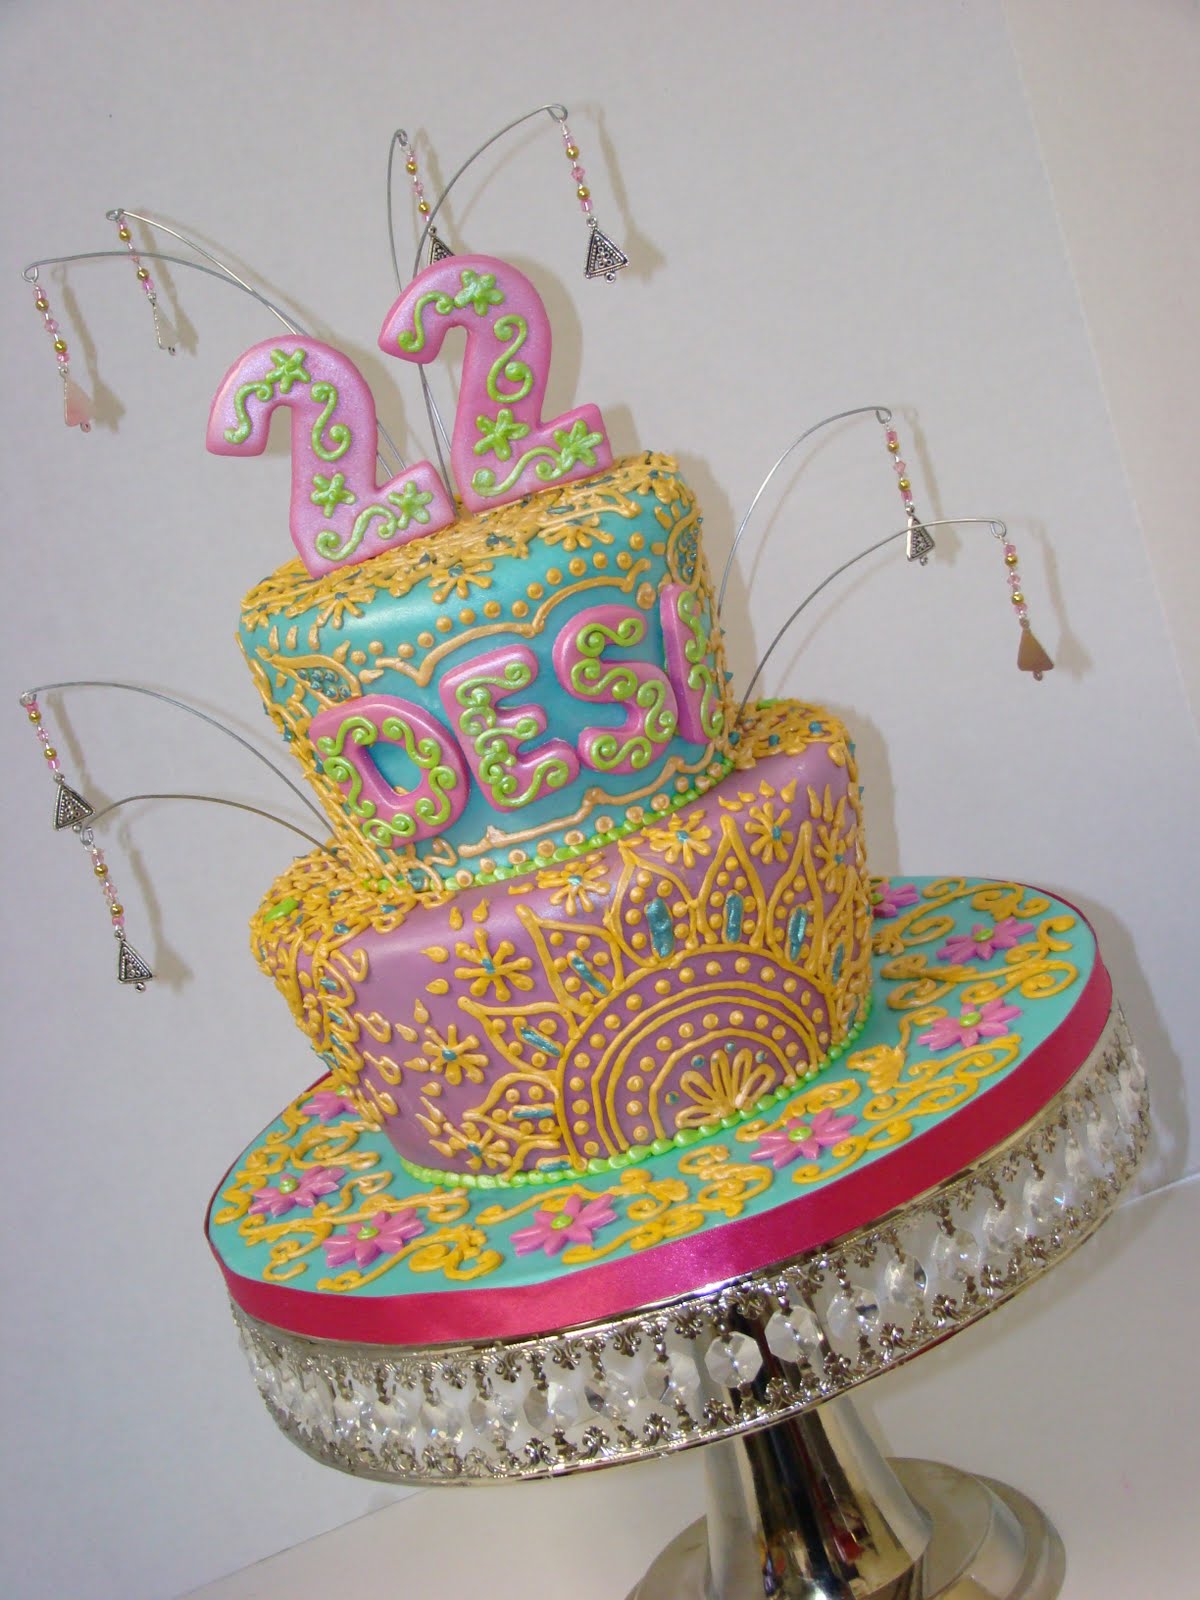 22nd+birthday+cake+ideas